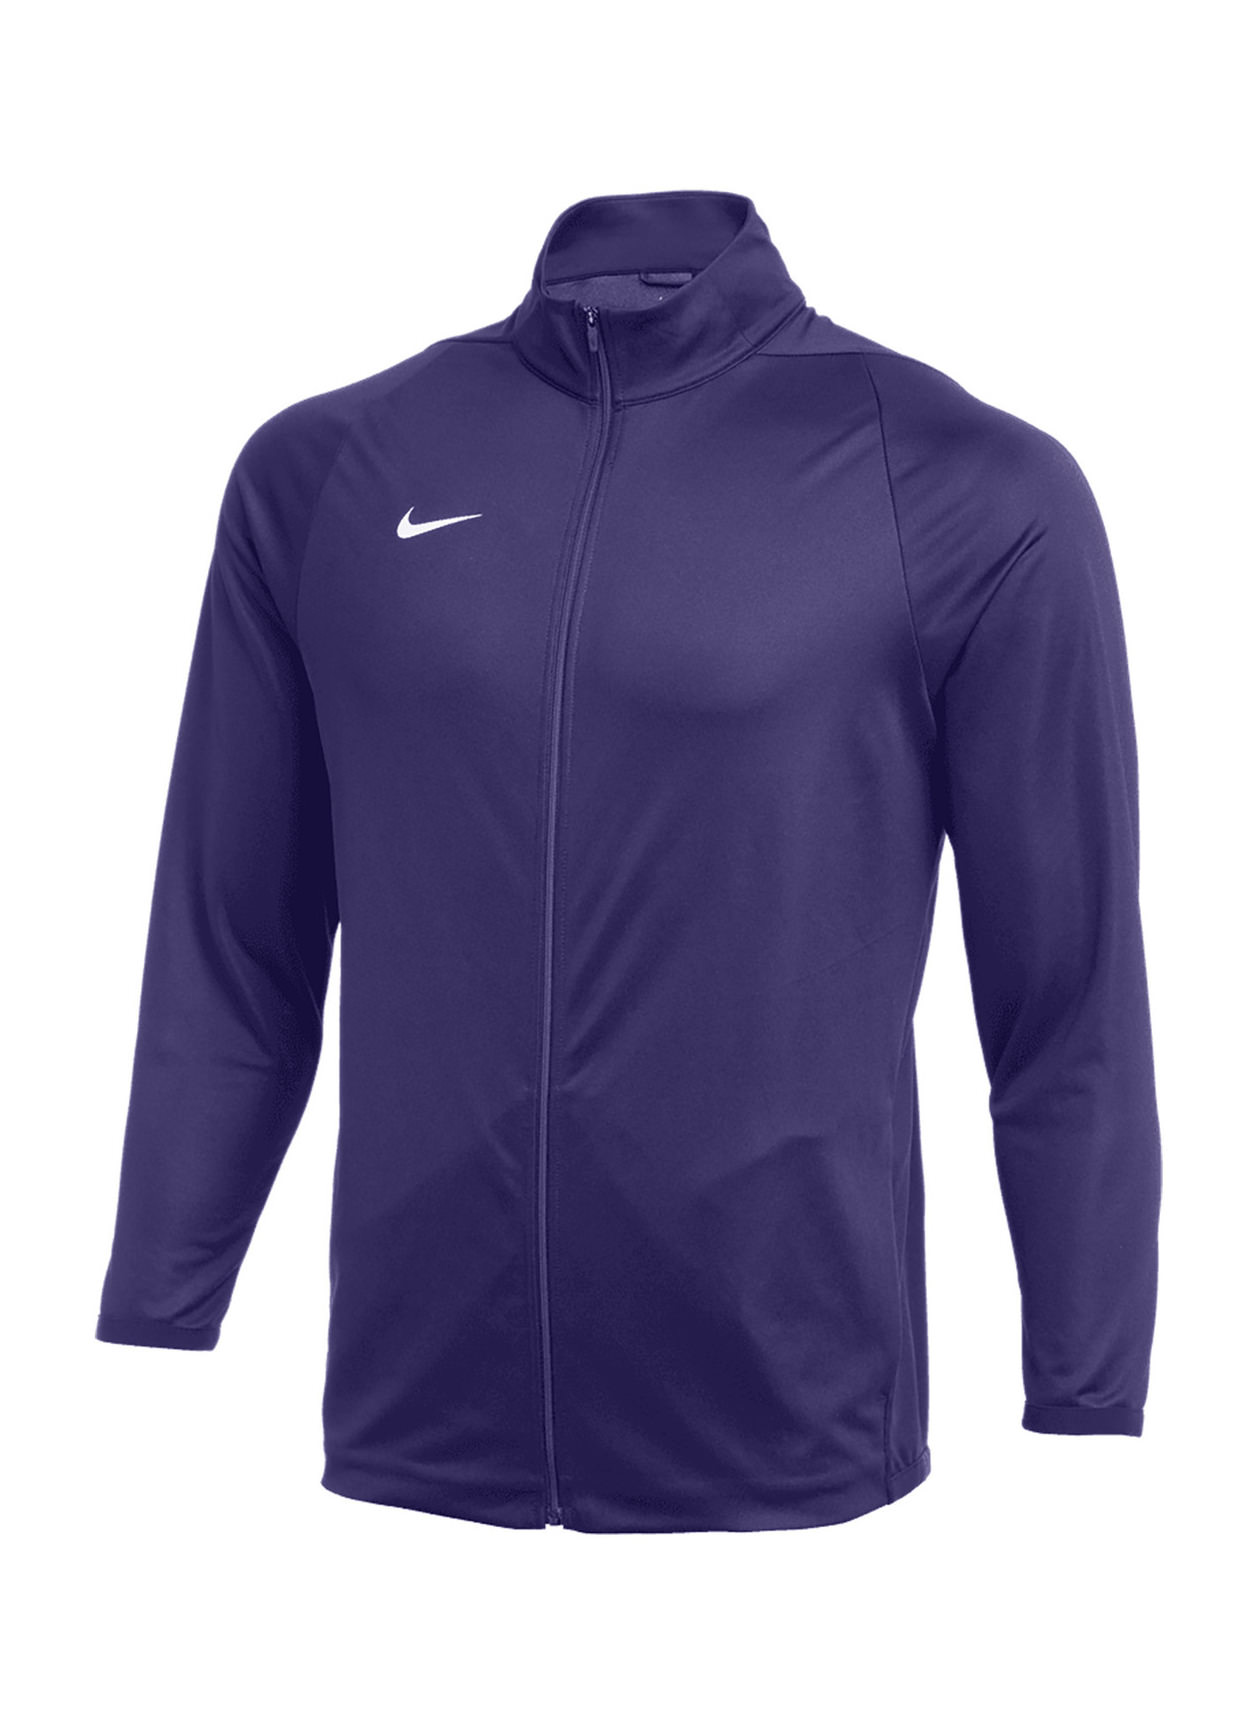 Nike Men's Team Purple / White Epic Knit Jacket 2.0